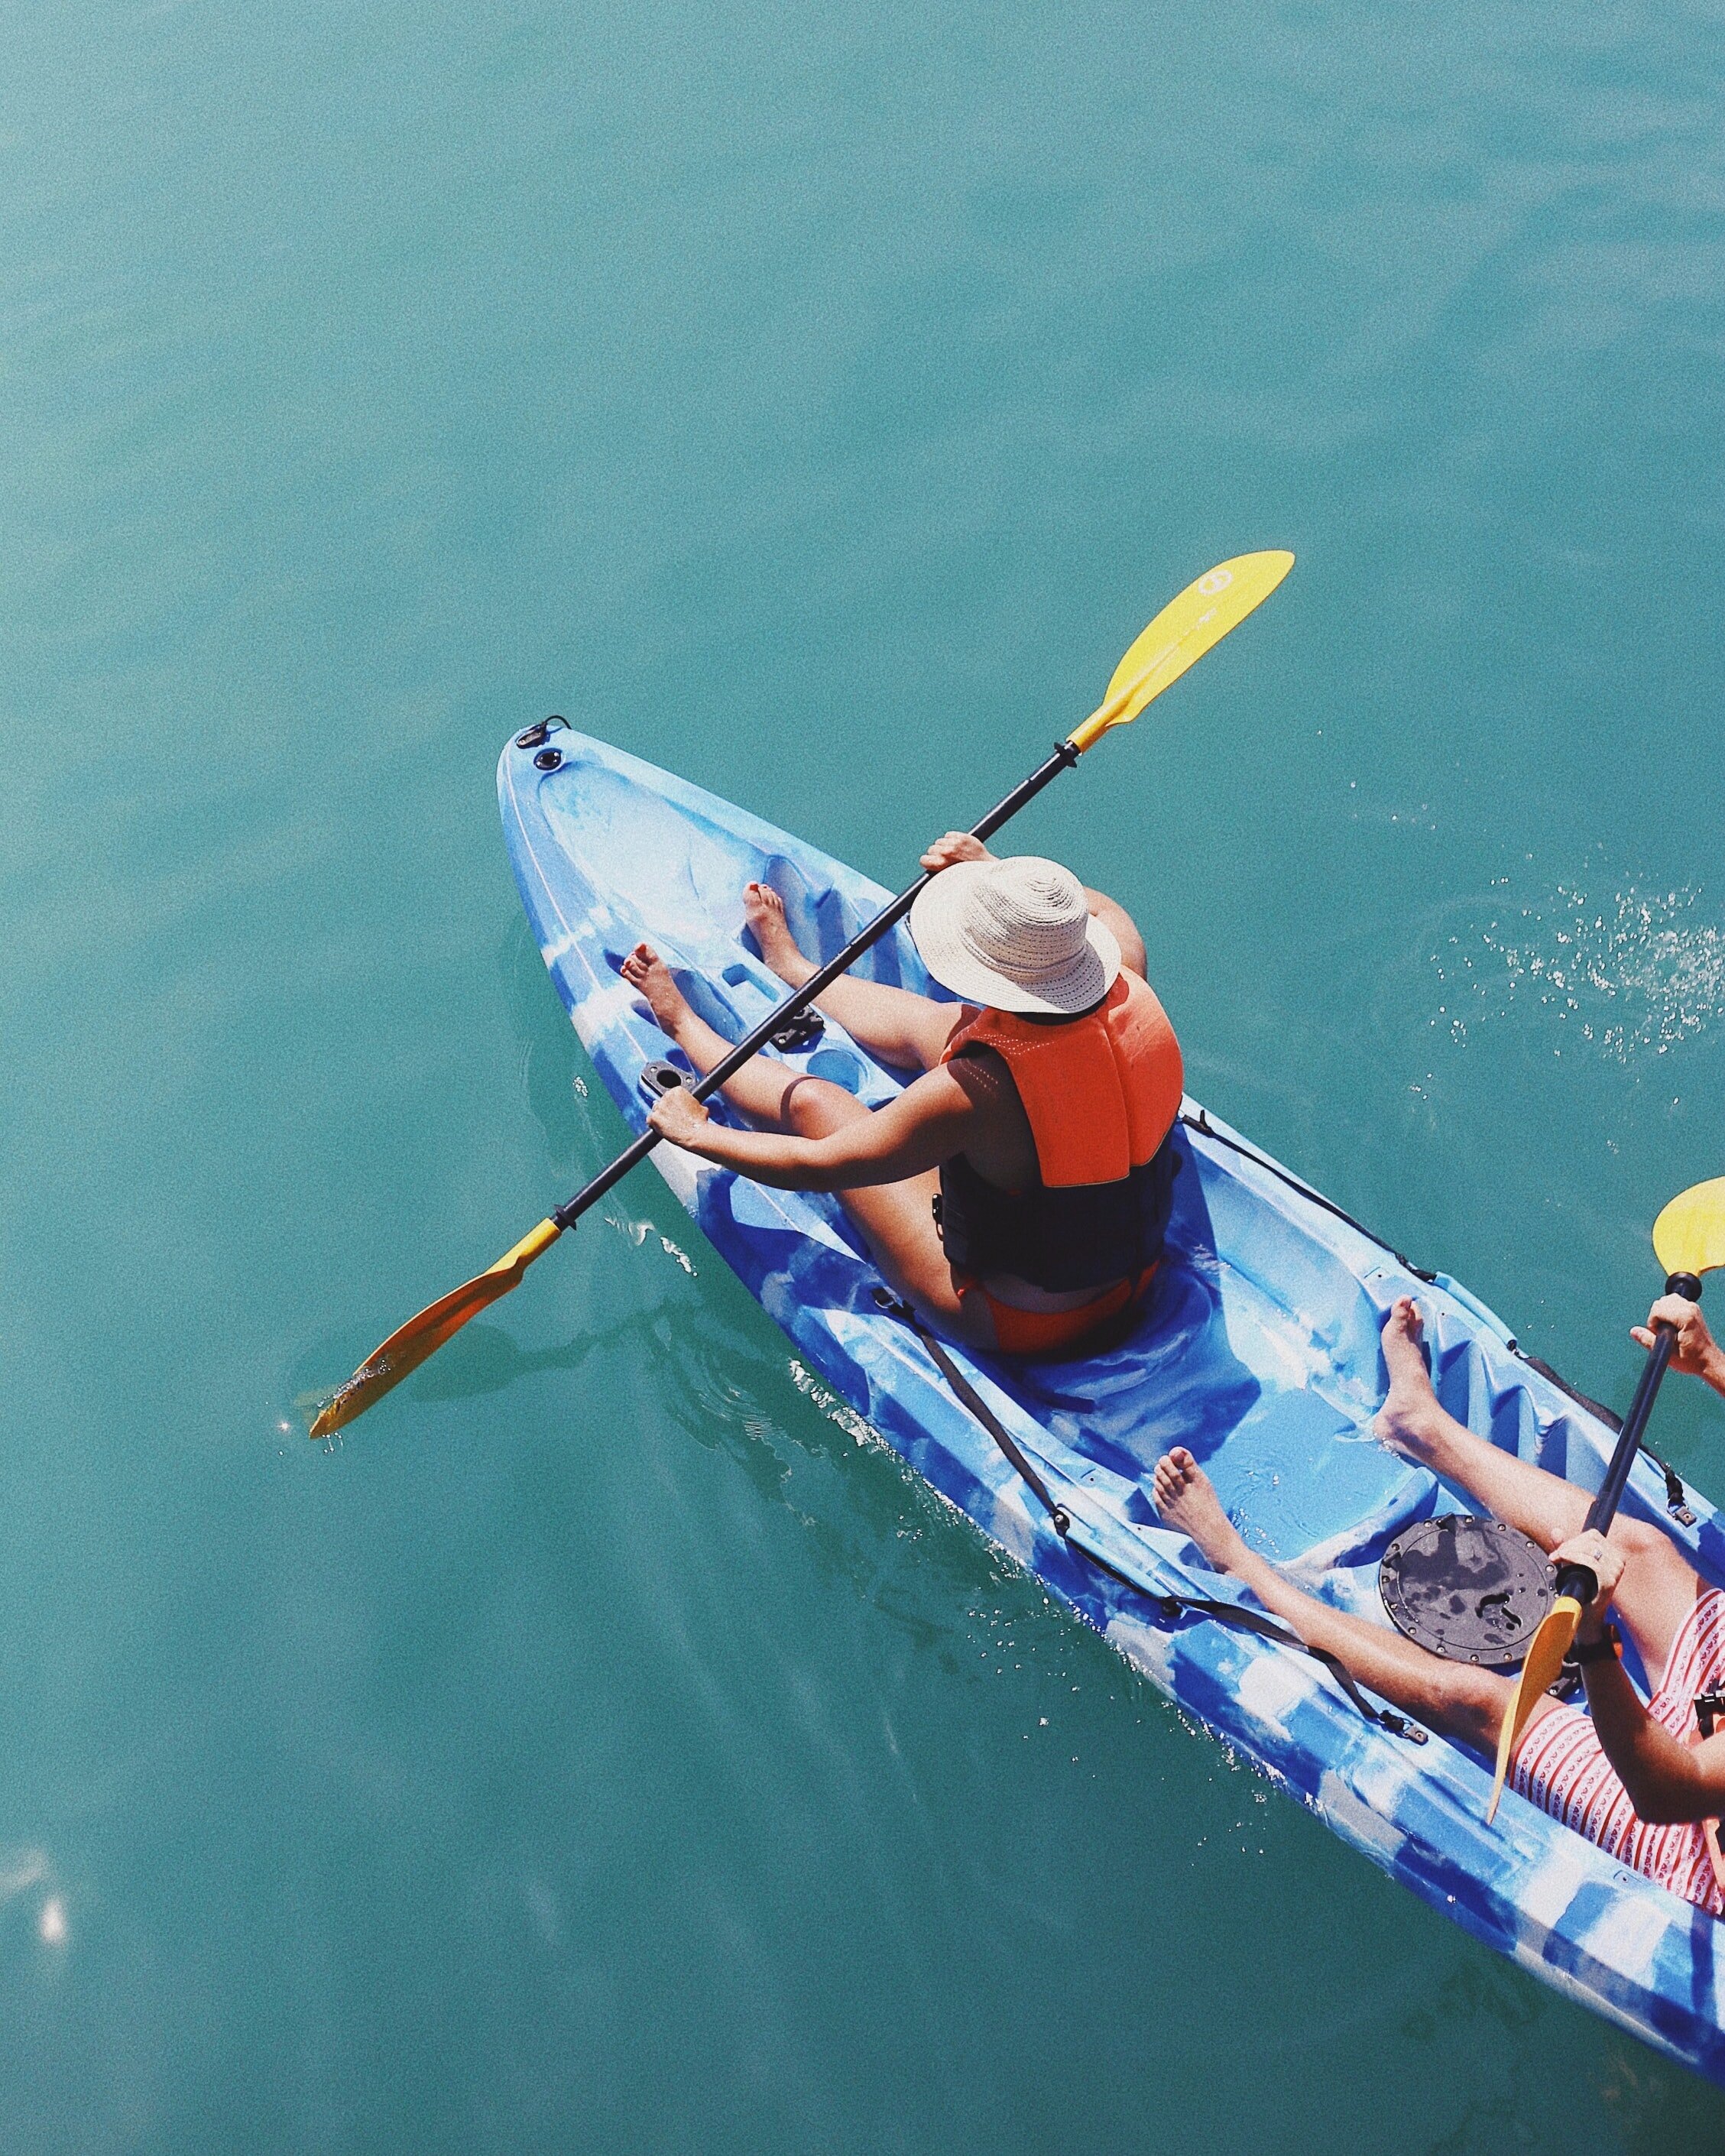 We love water sports like kayaking here at 10K Dollar Day!